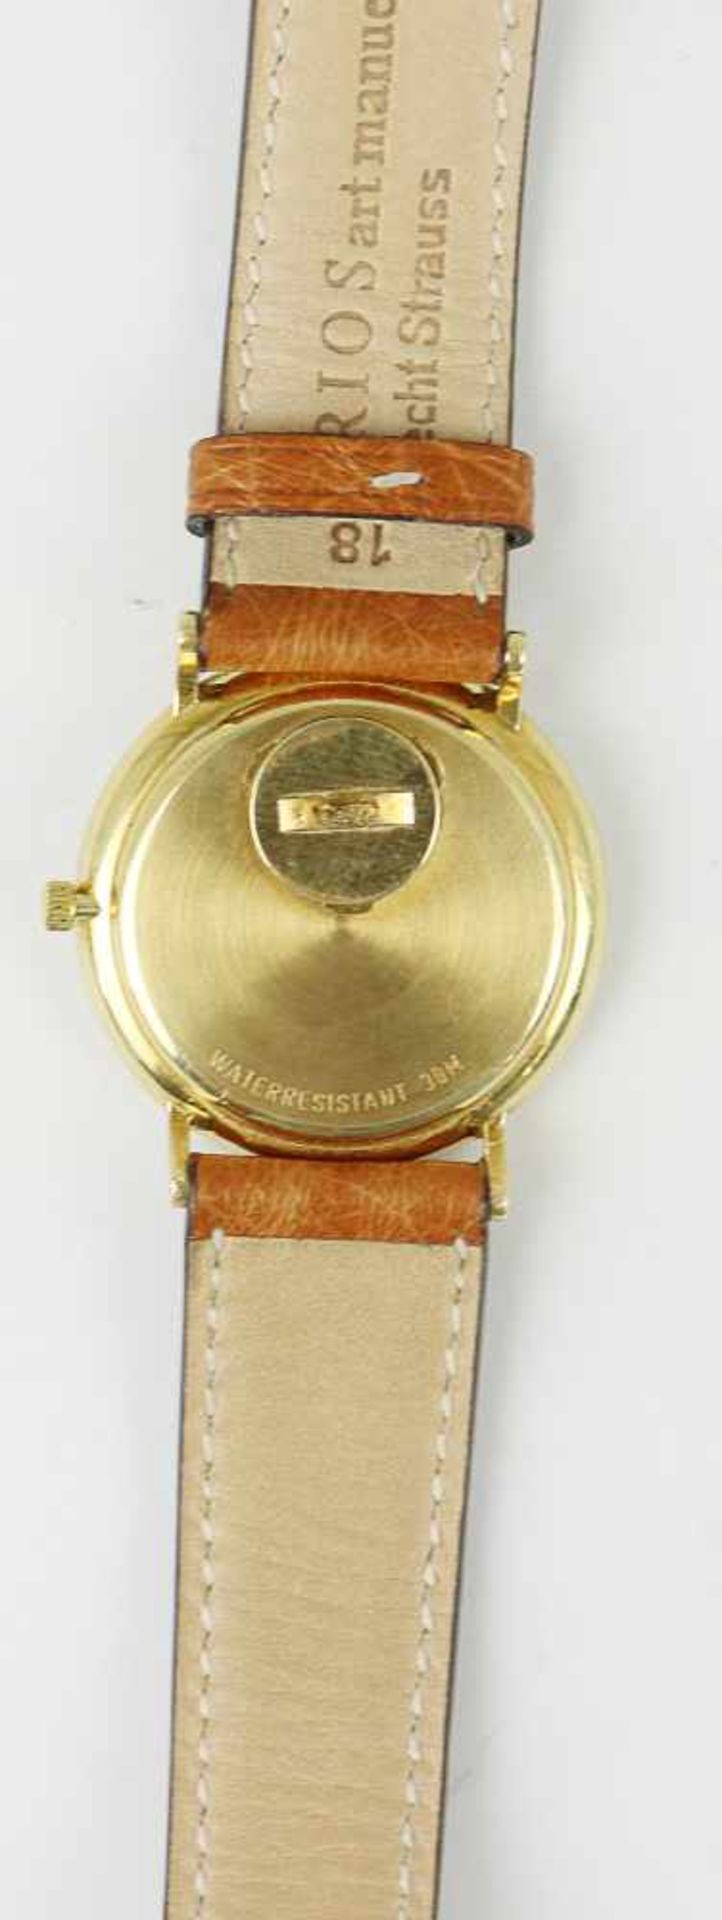 Herrenarmbanduhr - TissotSchweiz, GG 750, rundes Gehäuse, Dca.3,2cm, goldfarbenes Zifferblatt, - Image 5 of 5